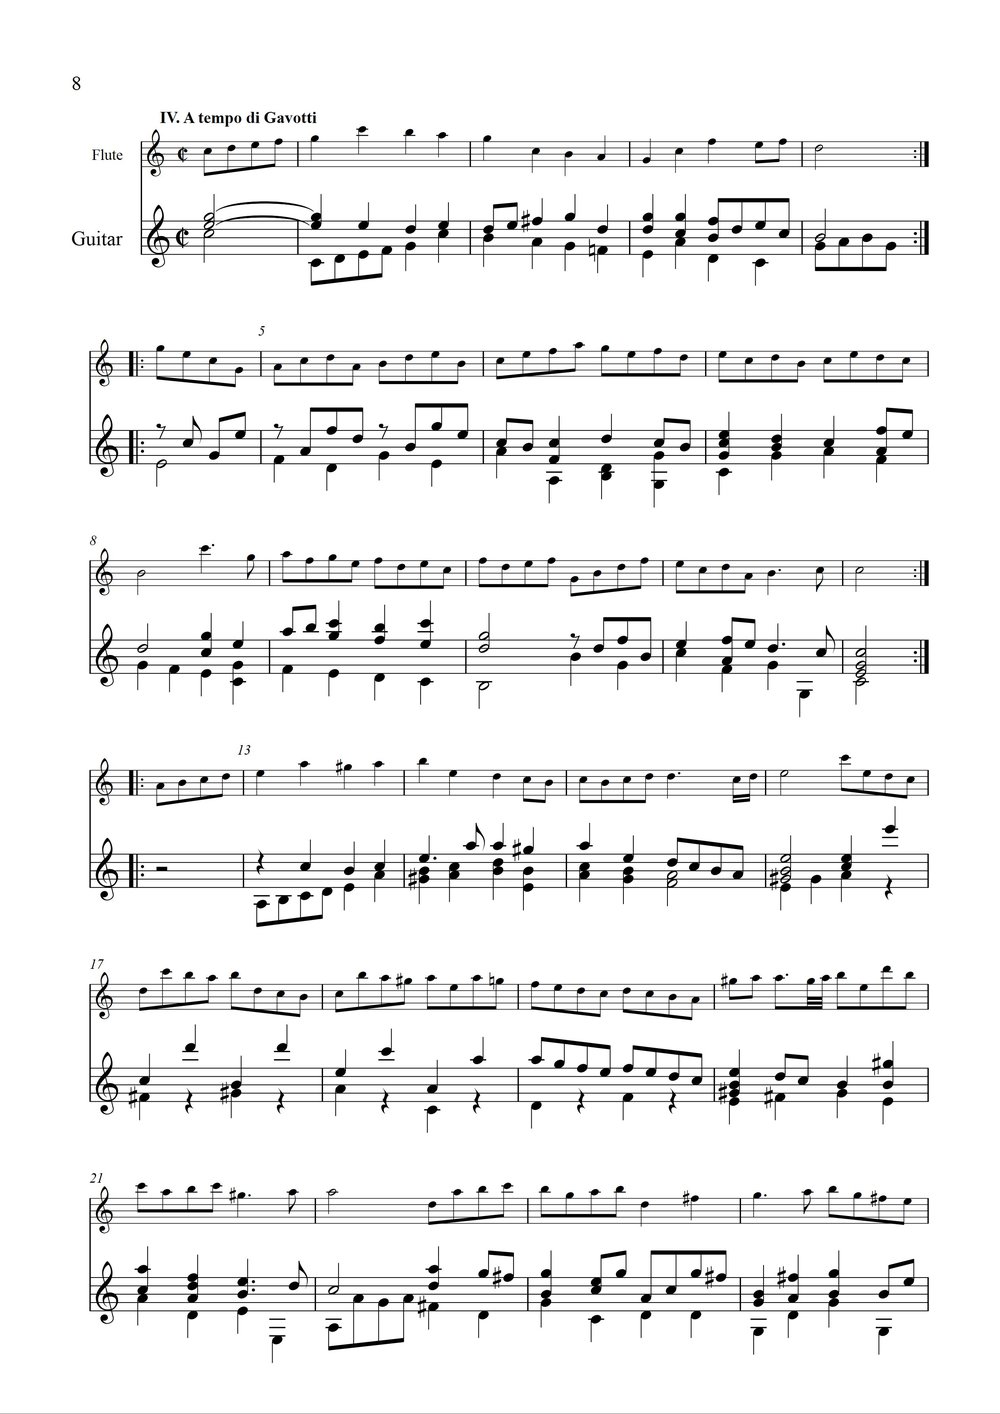 Sonata in C, Op. 1 no. 7 - sample page